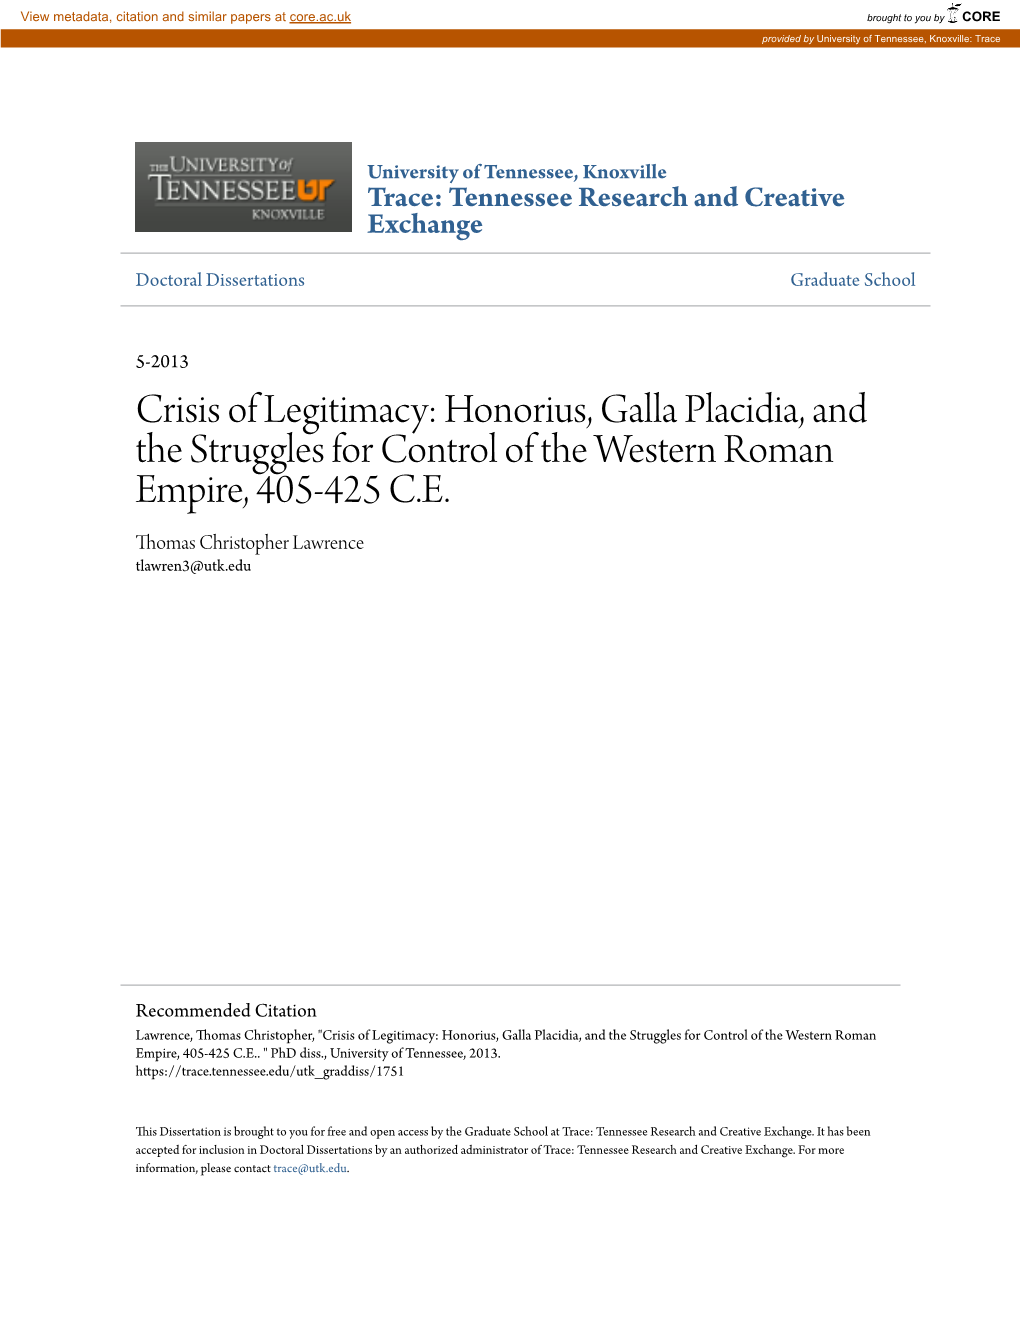 Honorius, Galla Placidia, and the Struggles for Control of the Western Roman Empire, 405-425 CE